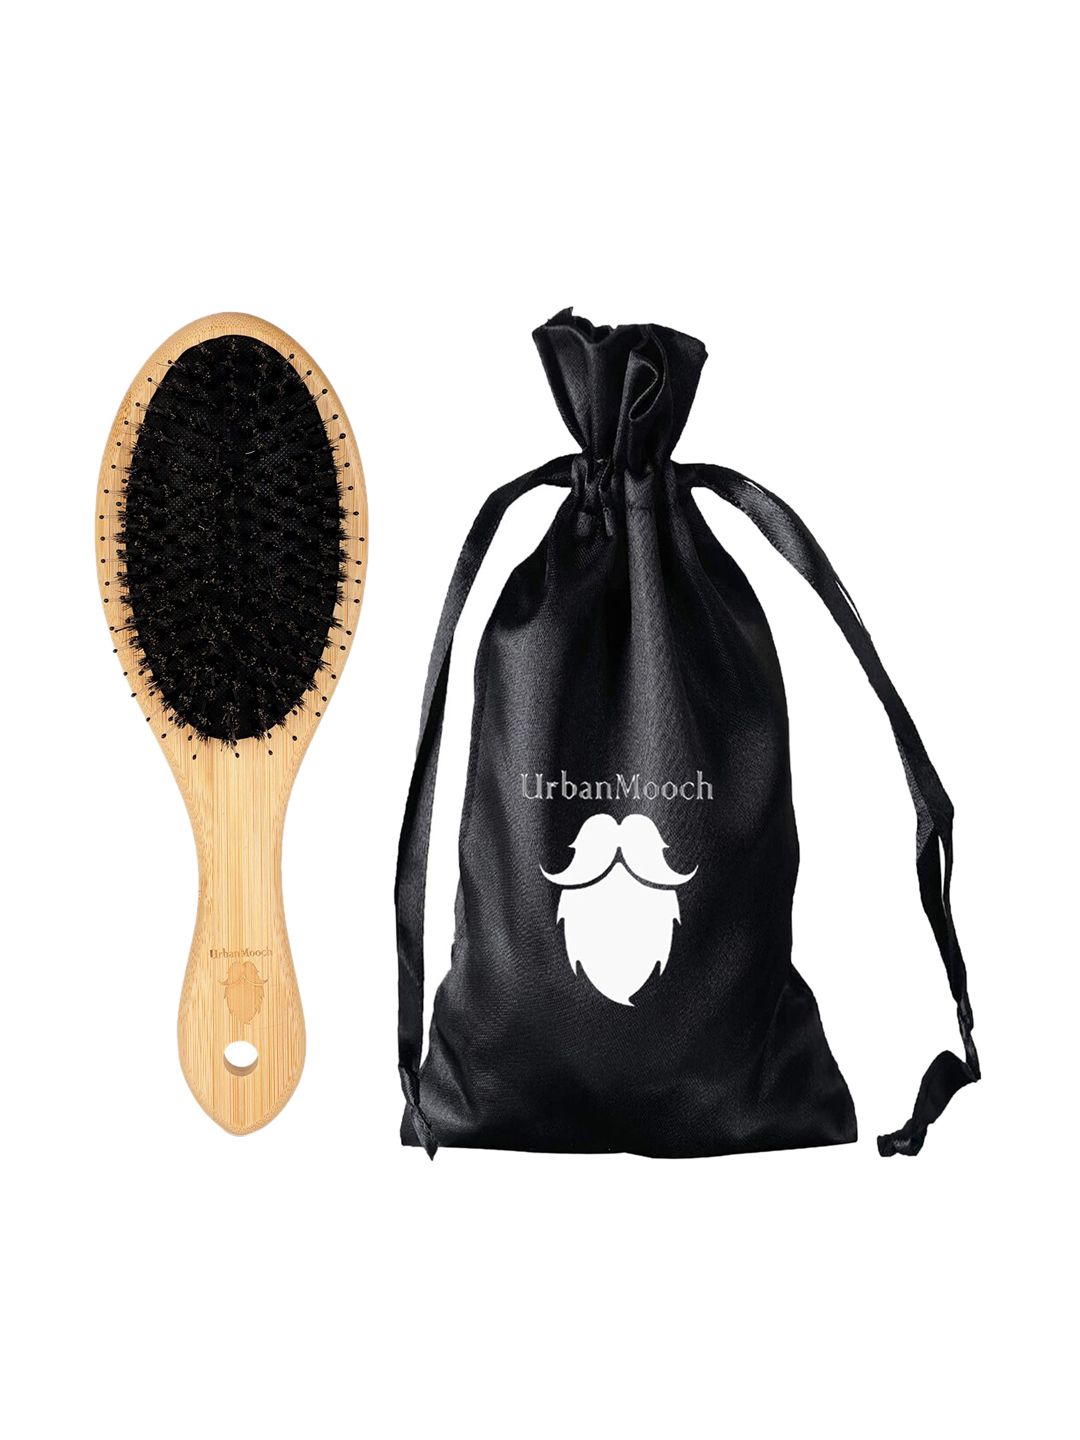 UrbanMooch Boar & Nylon Bristle Bamboo Hair Brush - Beige Price in India